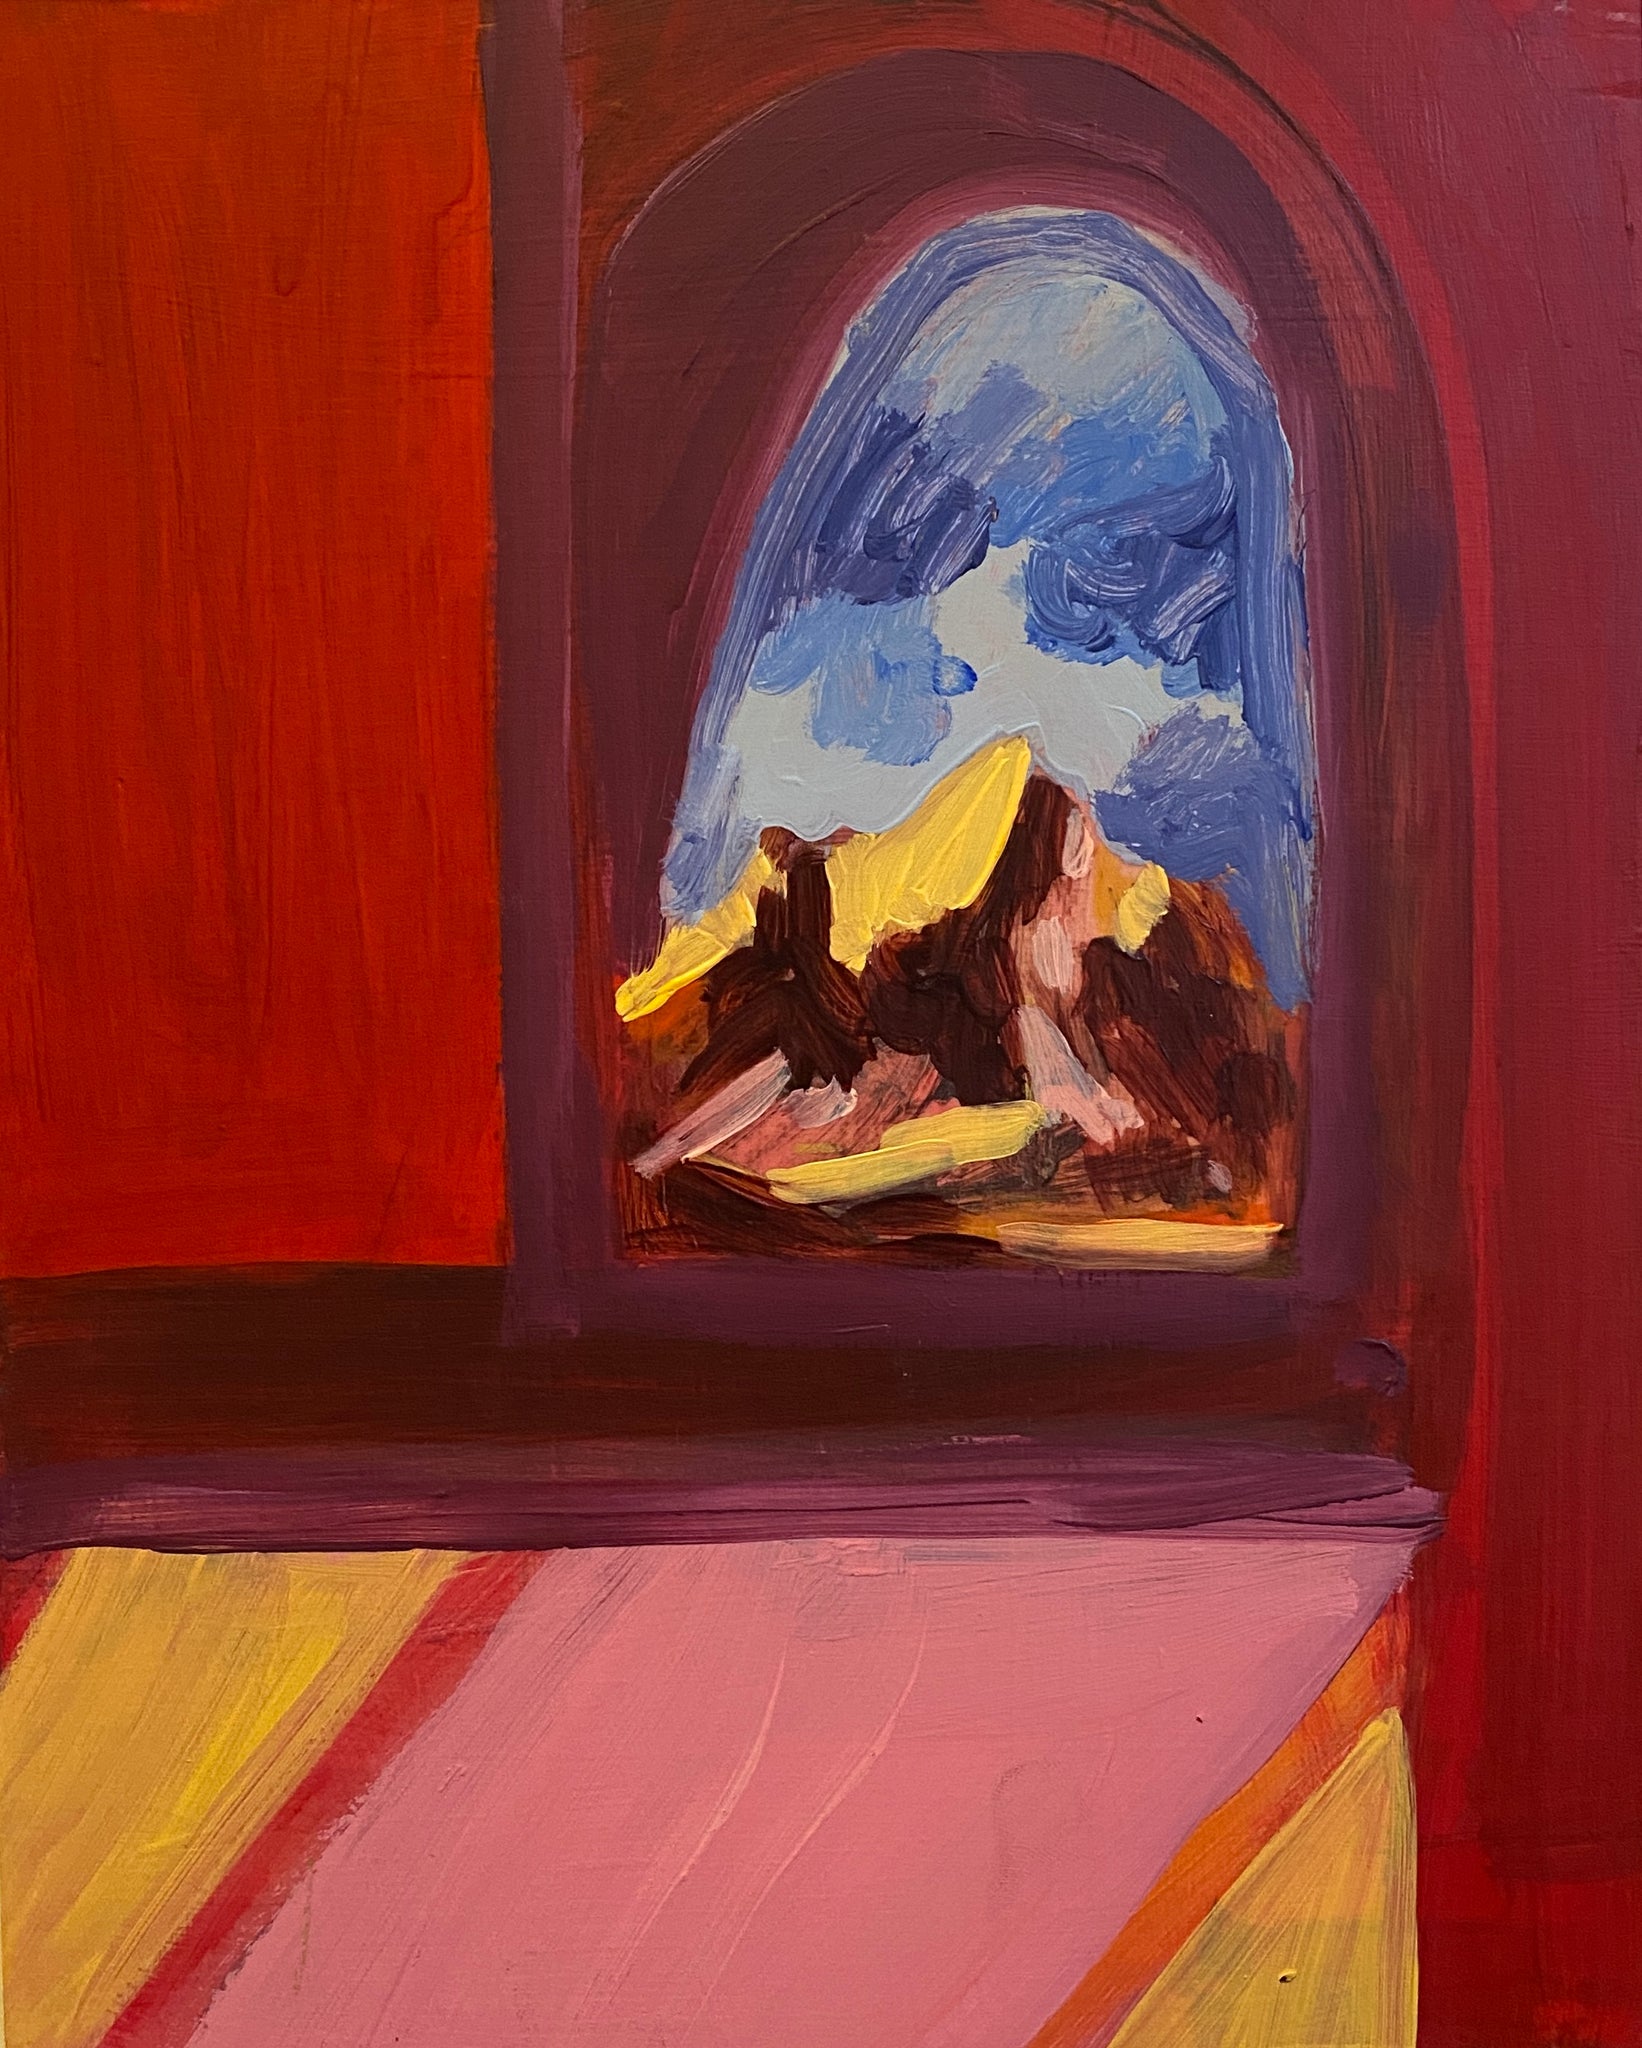 Nicole Basilone, "Window after Leonardo"